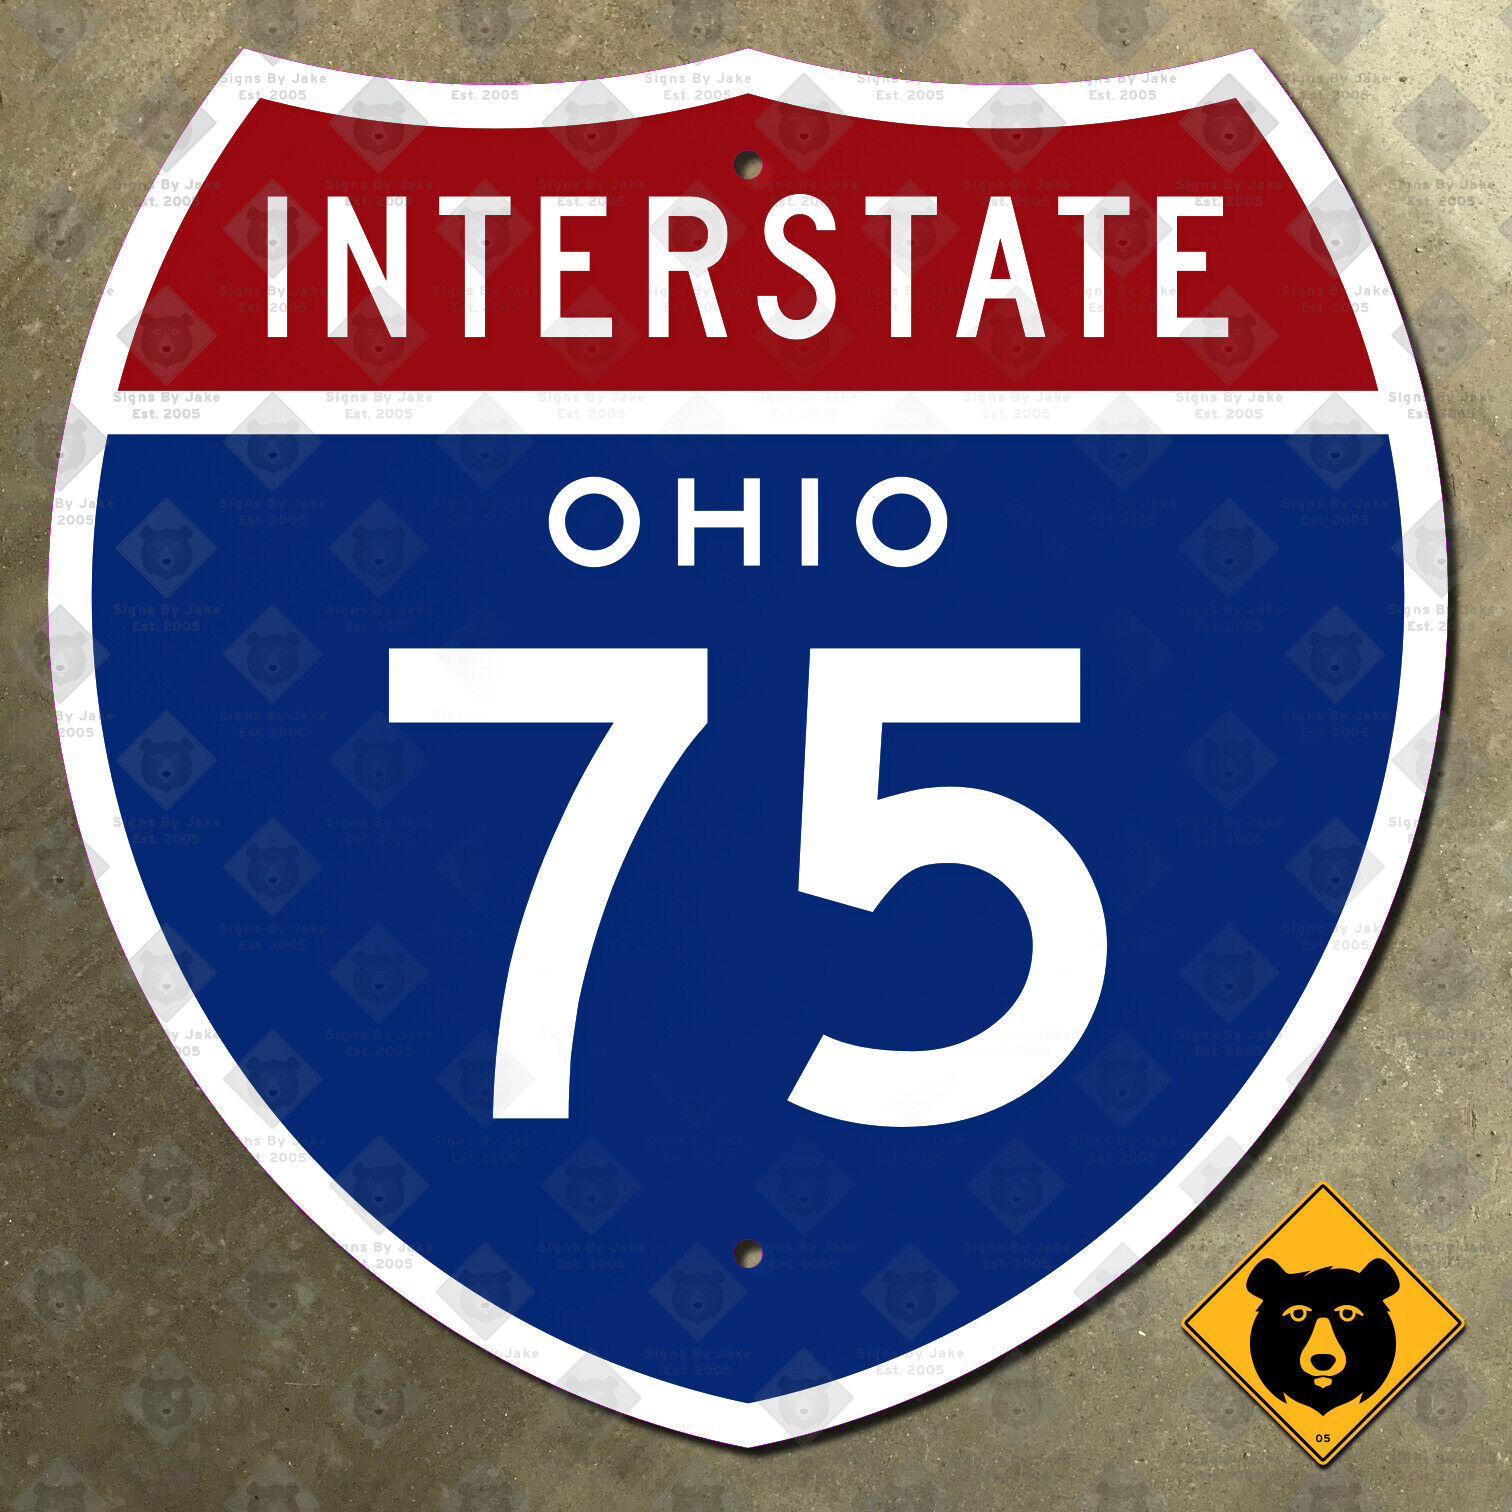 Ohio Interstate 75 highway route sign 1957 Cincinnati Dayton Toledo 18x18